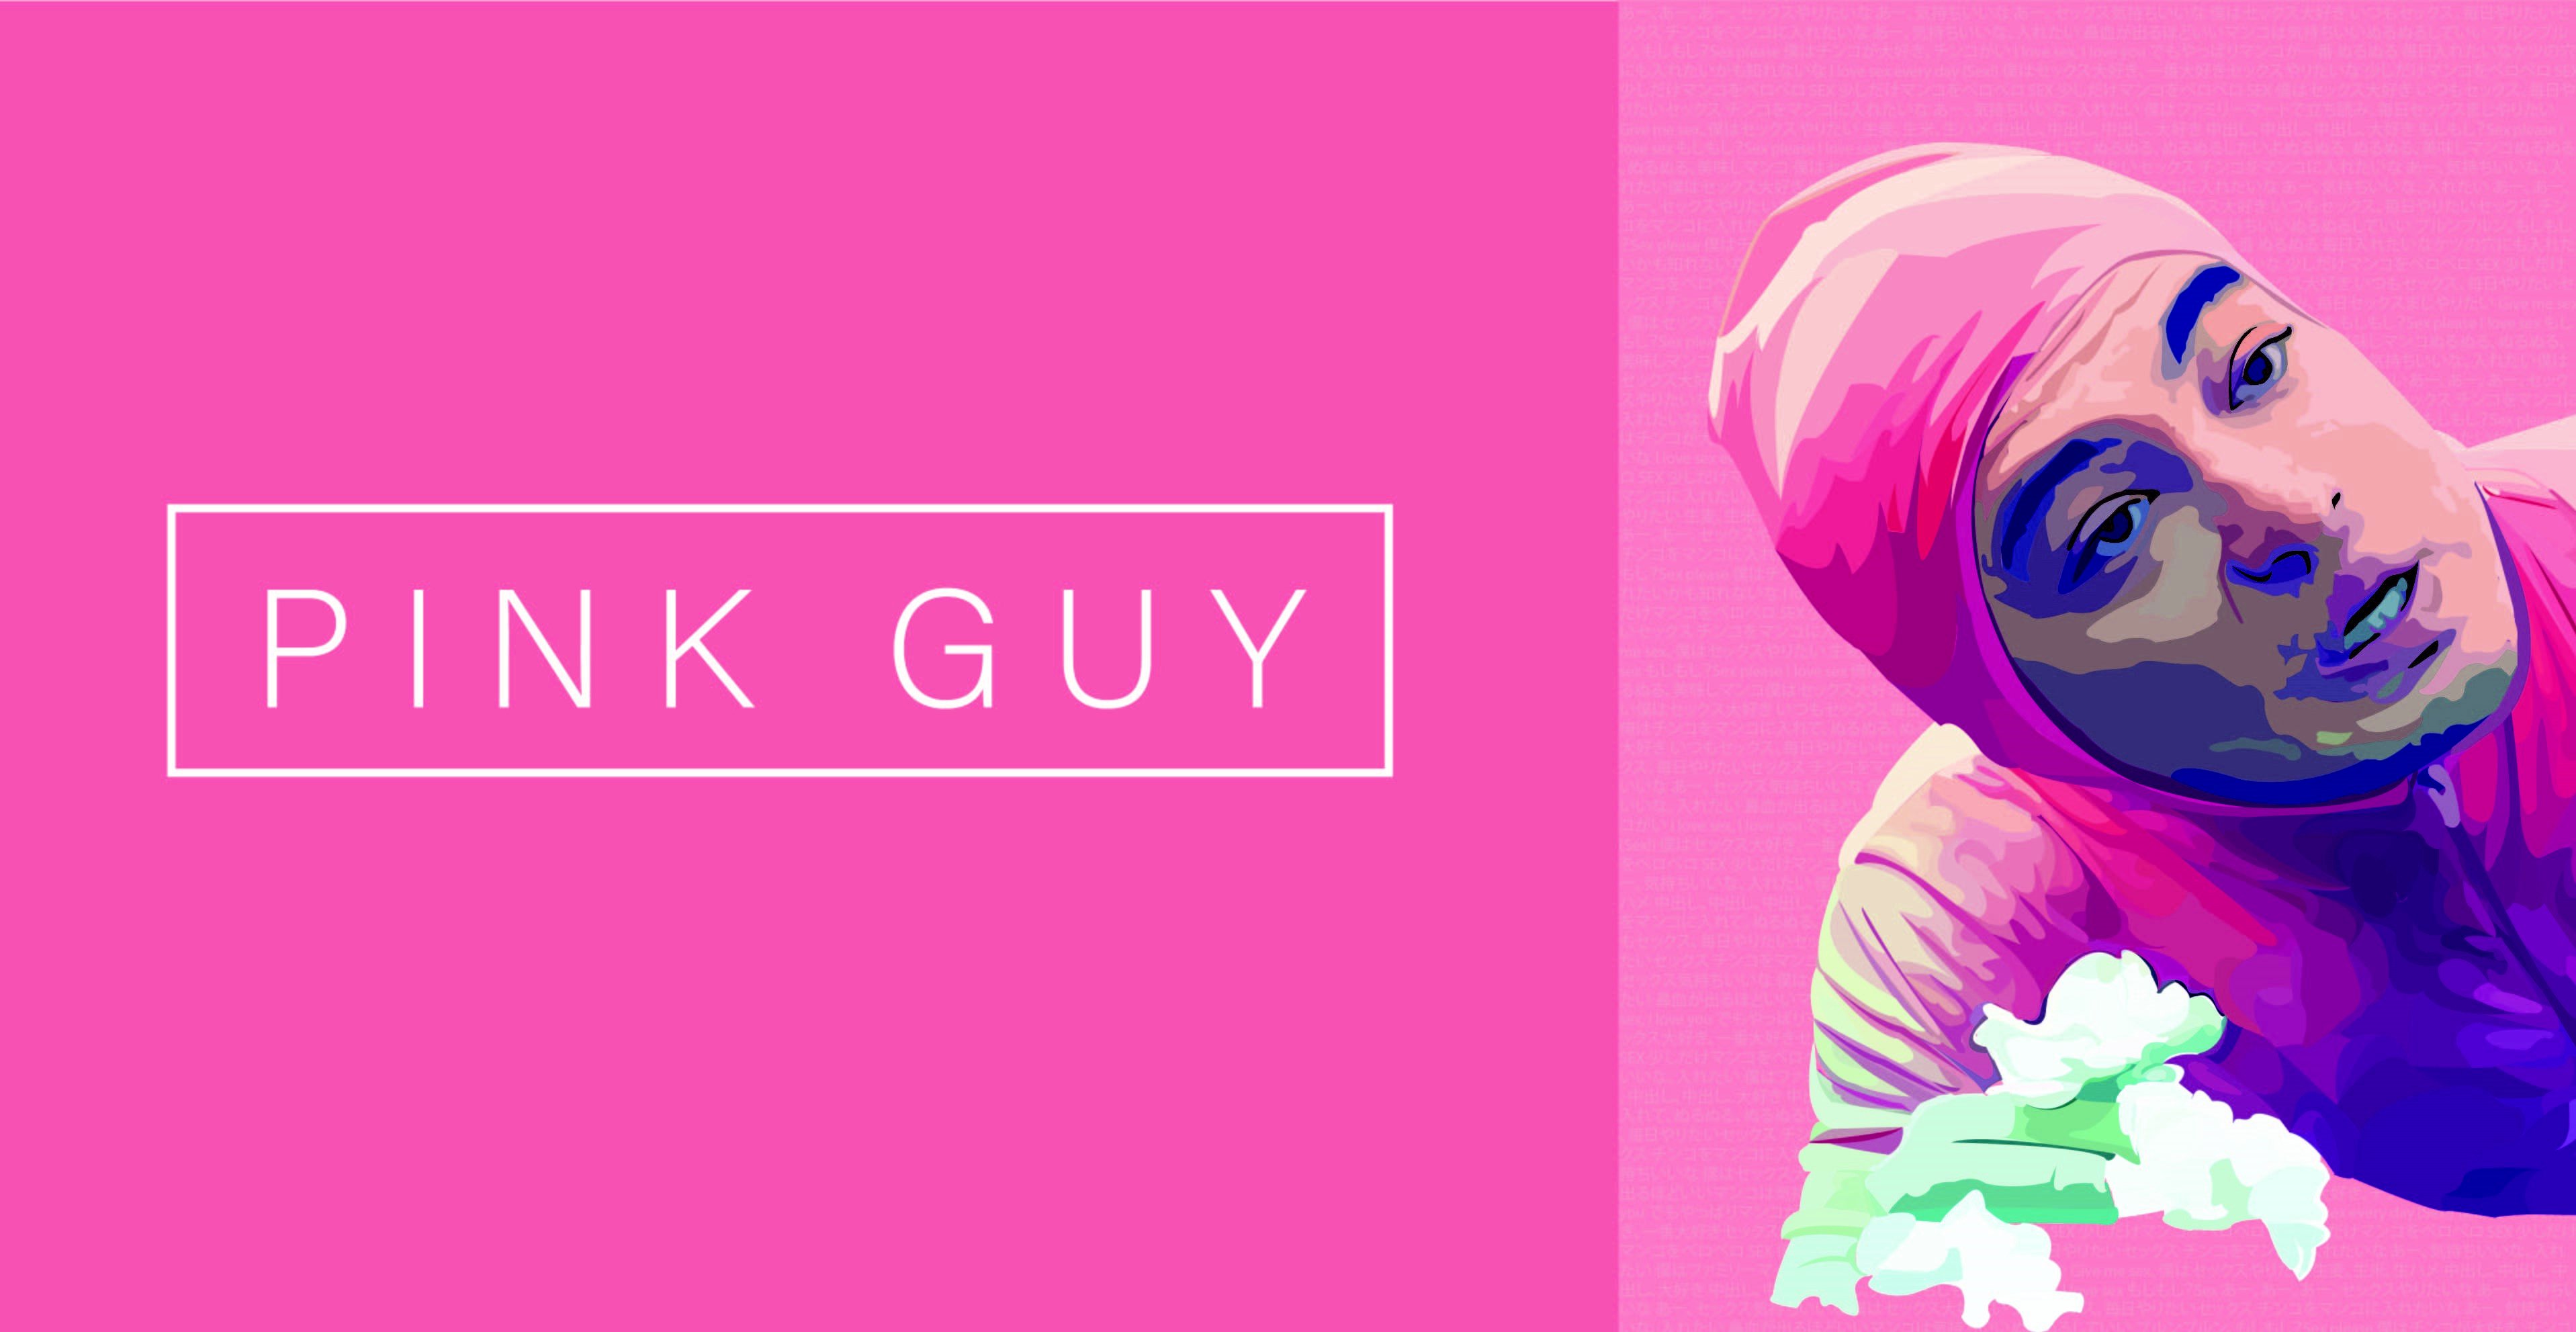 i made joji so now we have pink guy  Filthy frank wallpaper Cute  cartoon wallpapers Cartoon wallpaper